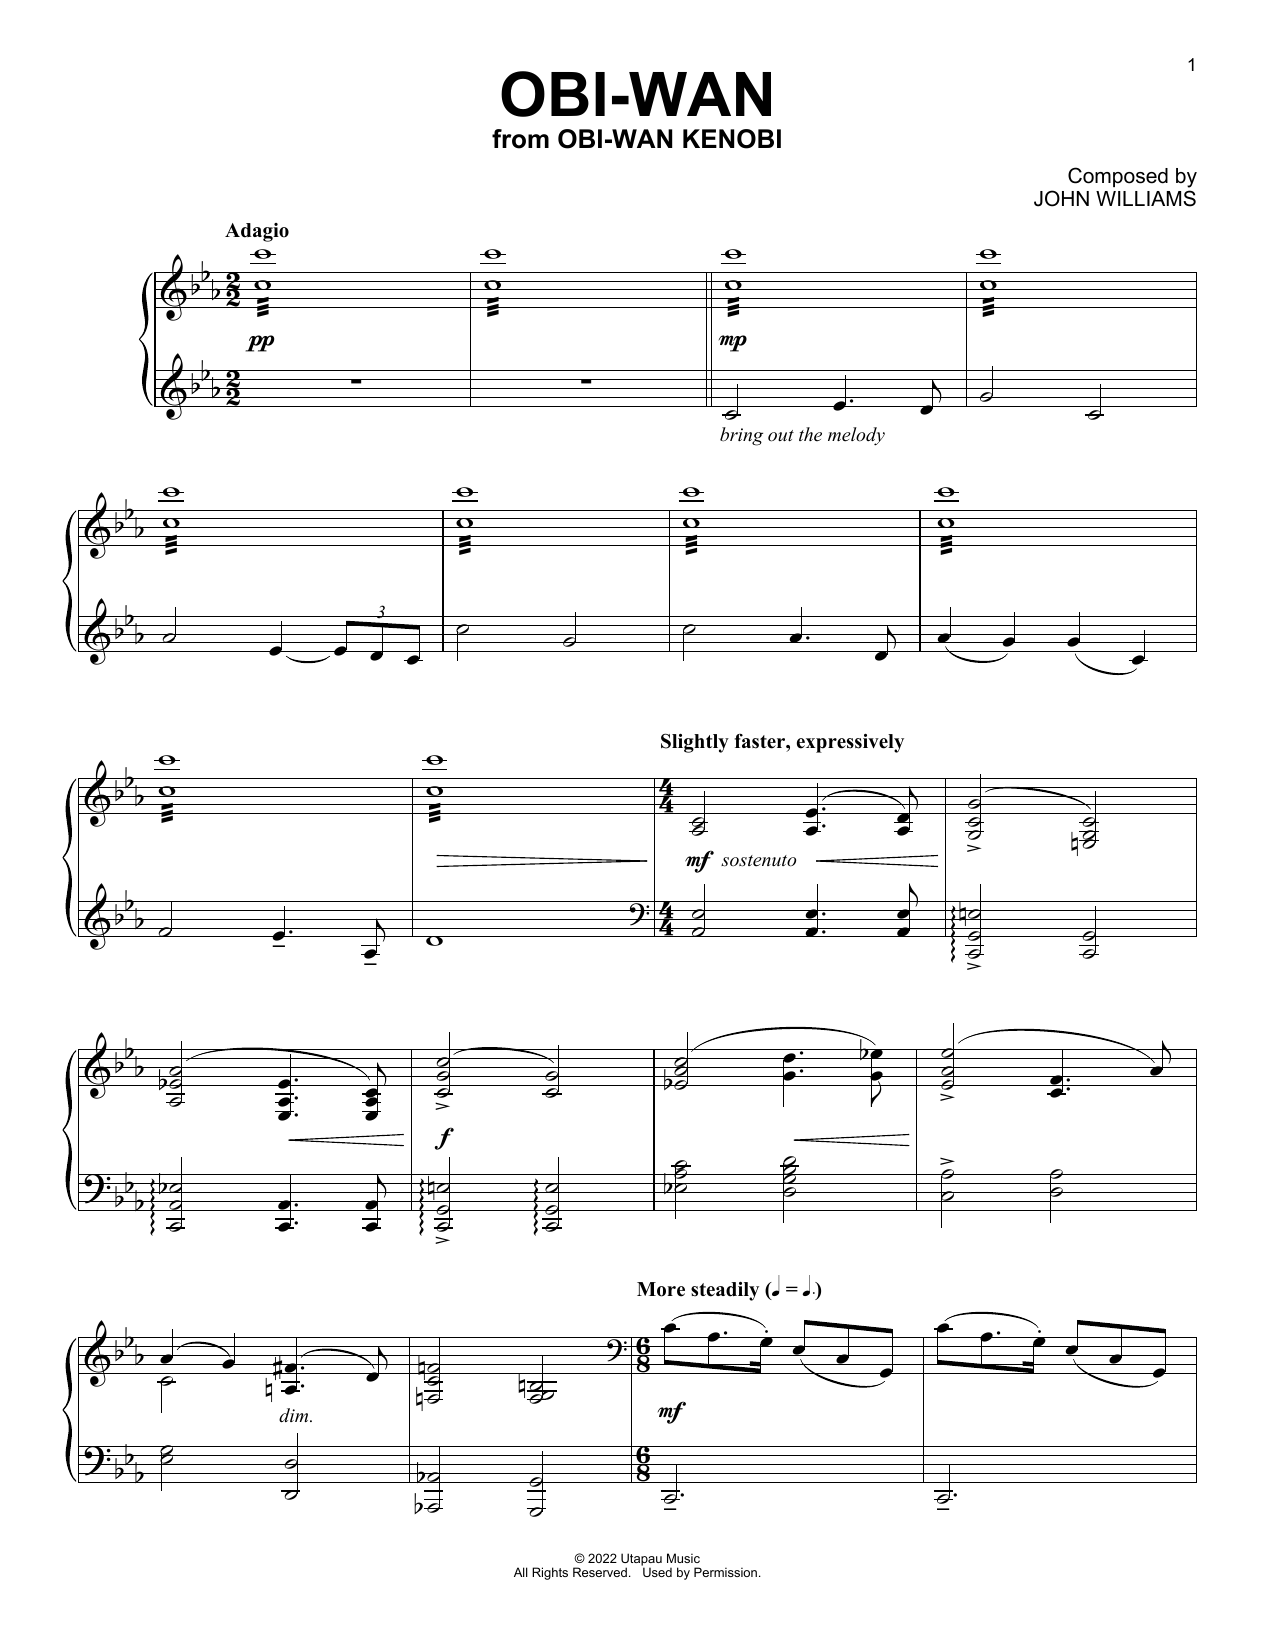 Download John Williams Obi-Wan (from Obi-Wan Kenobi) Sheet Music and learn how to play Easy Piano PDF digital score in minutes